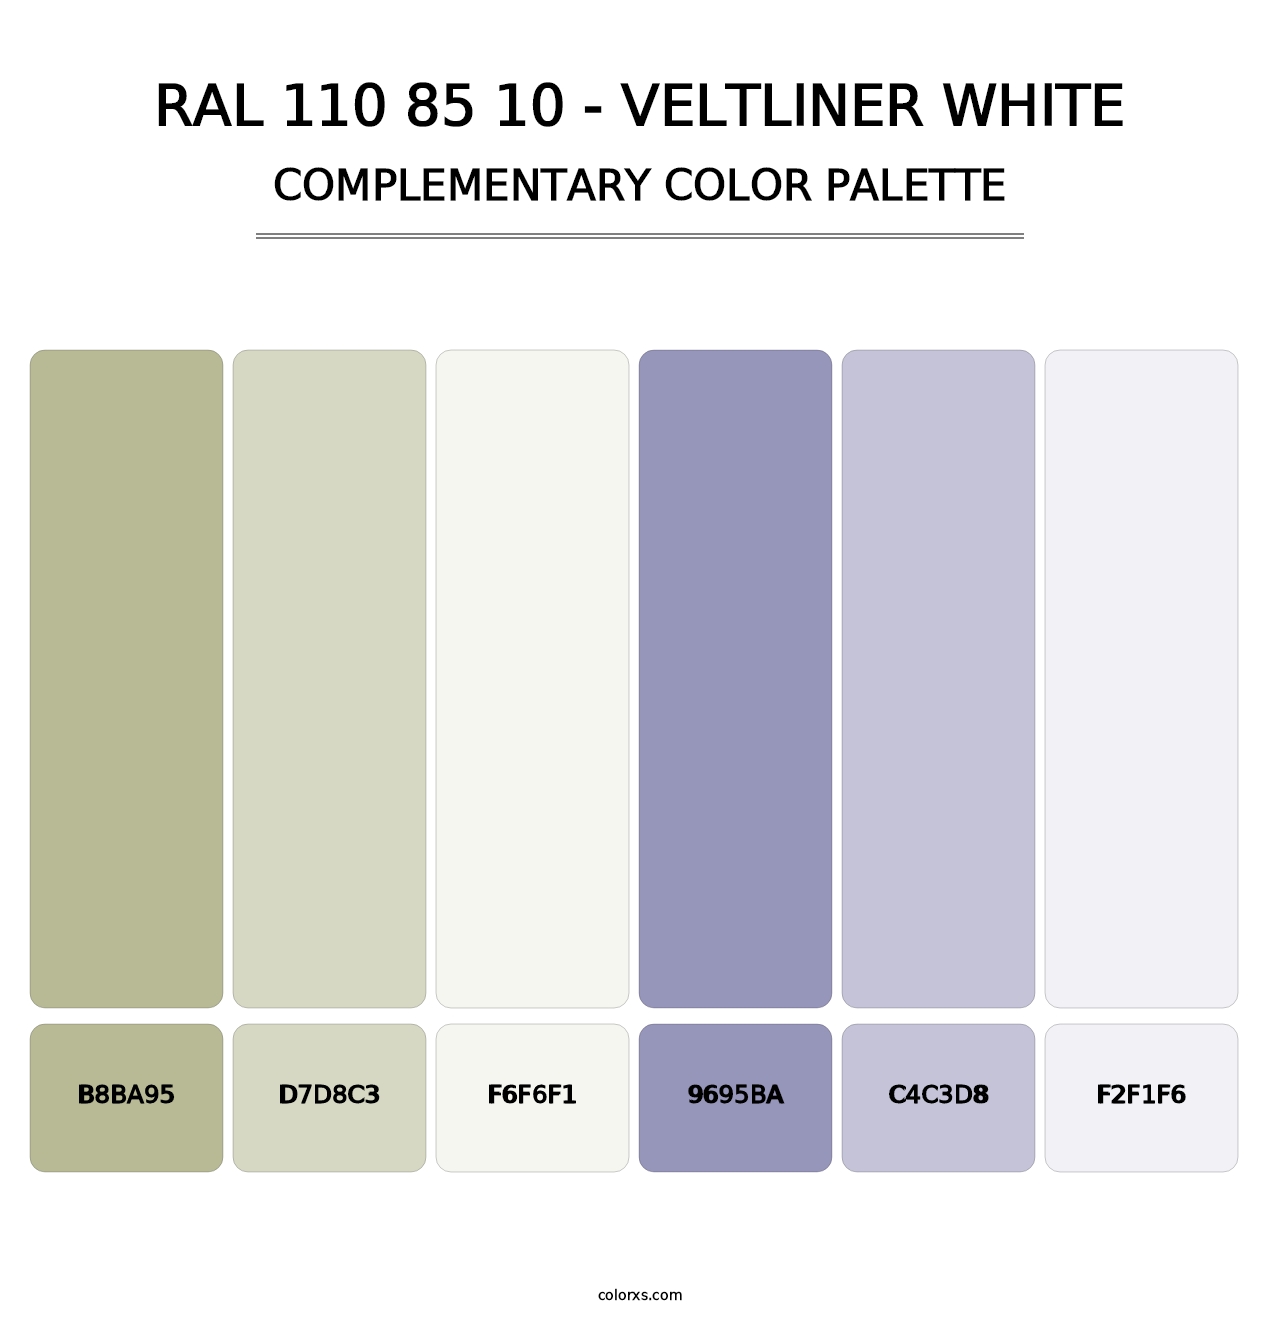 RAL 110 85 10 - Veltliner White - Complementary Color Palette